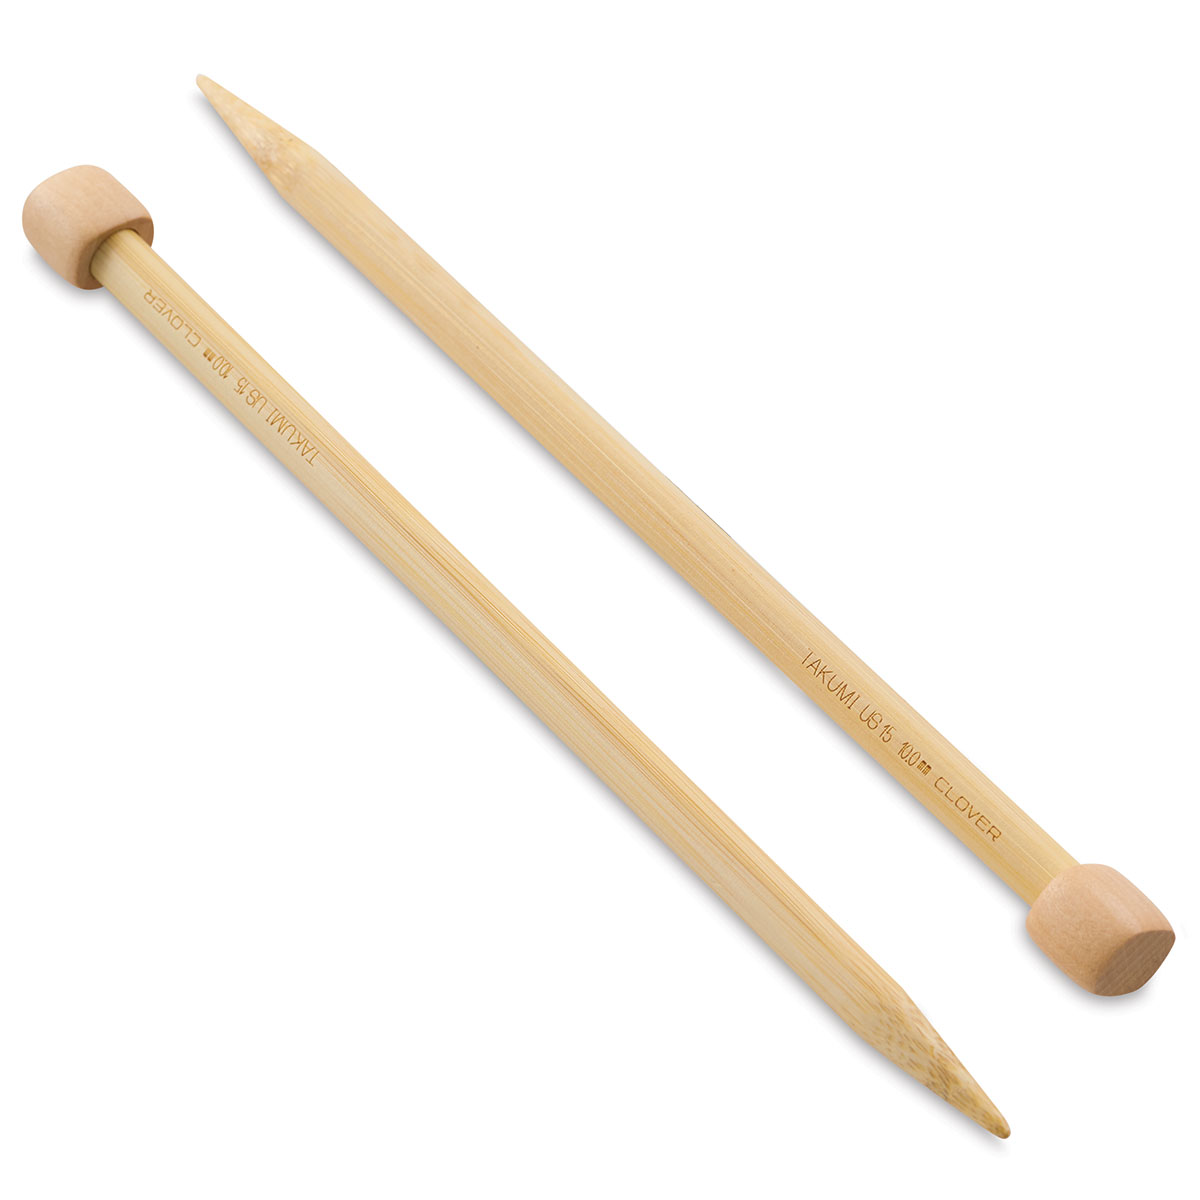 Clover Takumi Bamboo Single Point Knitting Needles - 9 inch Size 15